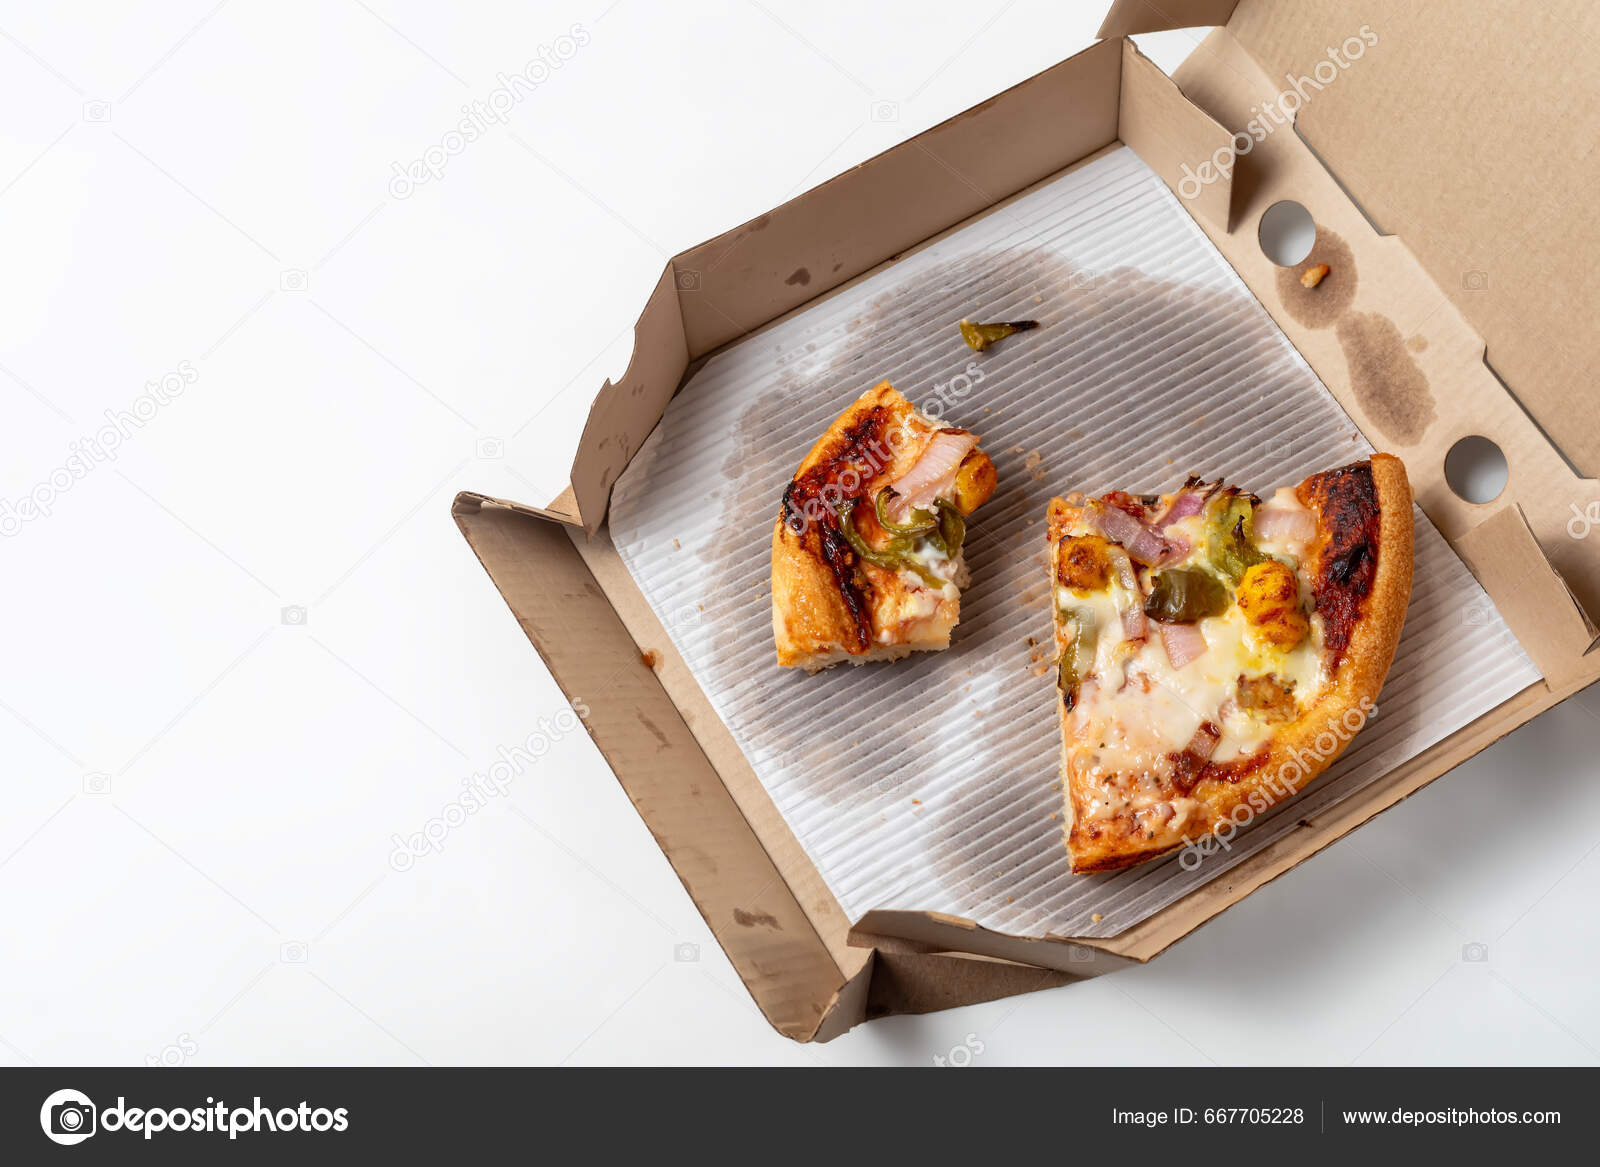 https://st5.depositphotos.com/7813332/66770/i/1600/depositphotos_667705228-stock-photo-leftover-pizza-open-cardboard-pizza.jpg